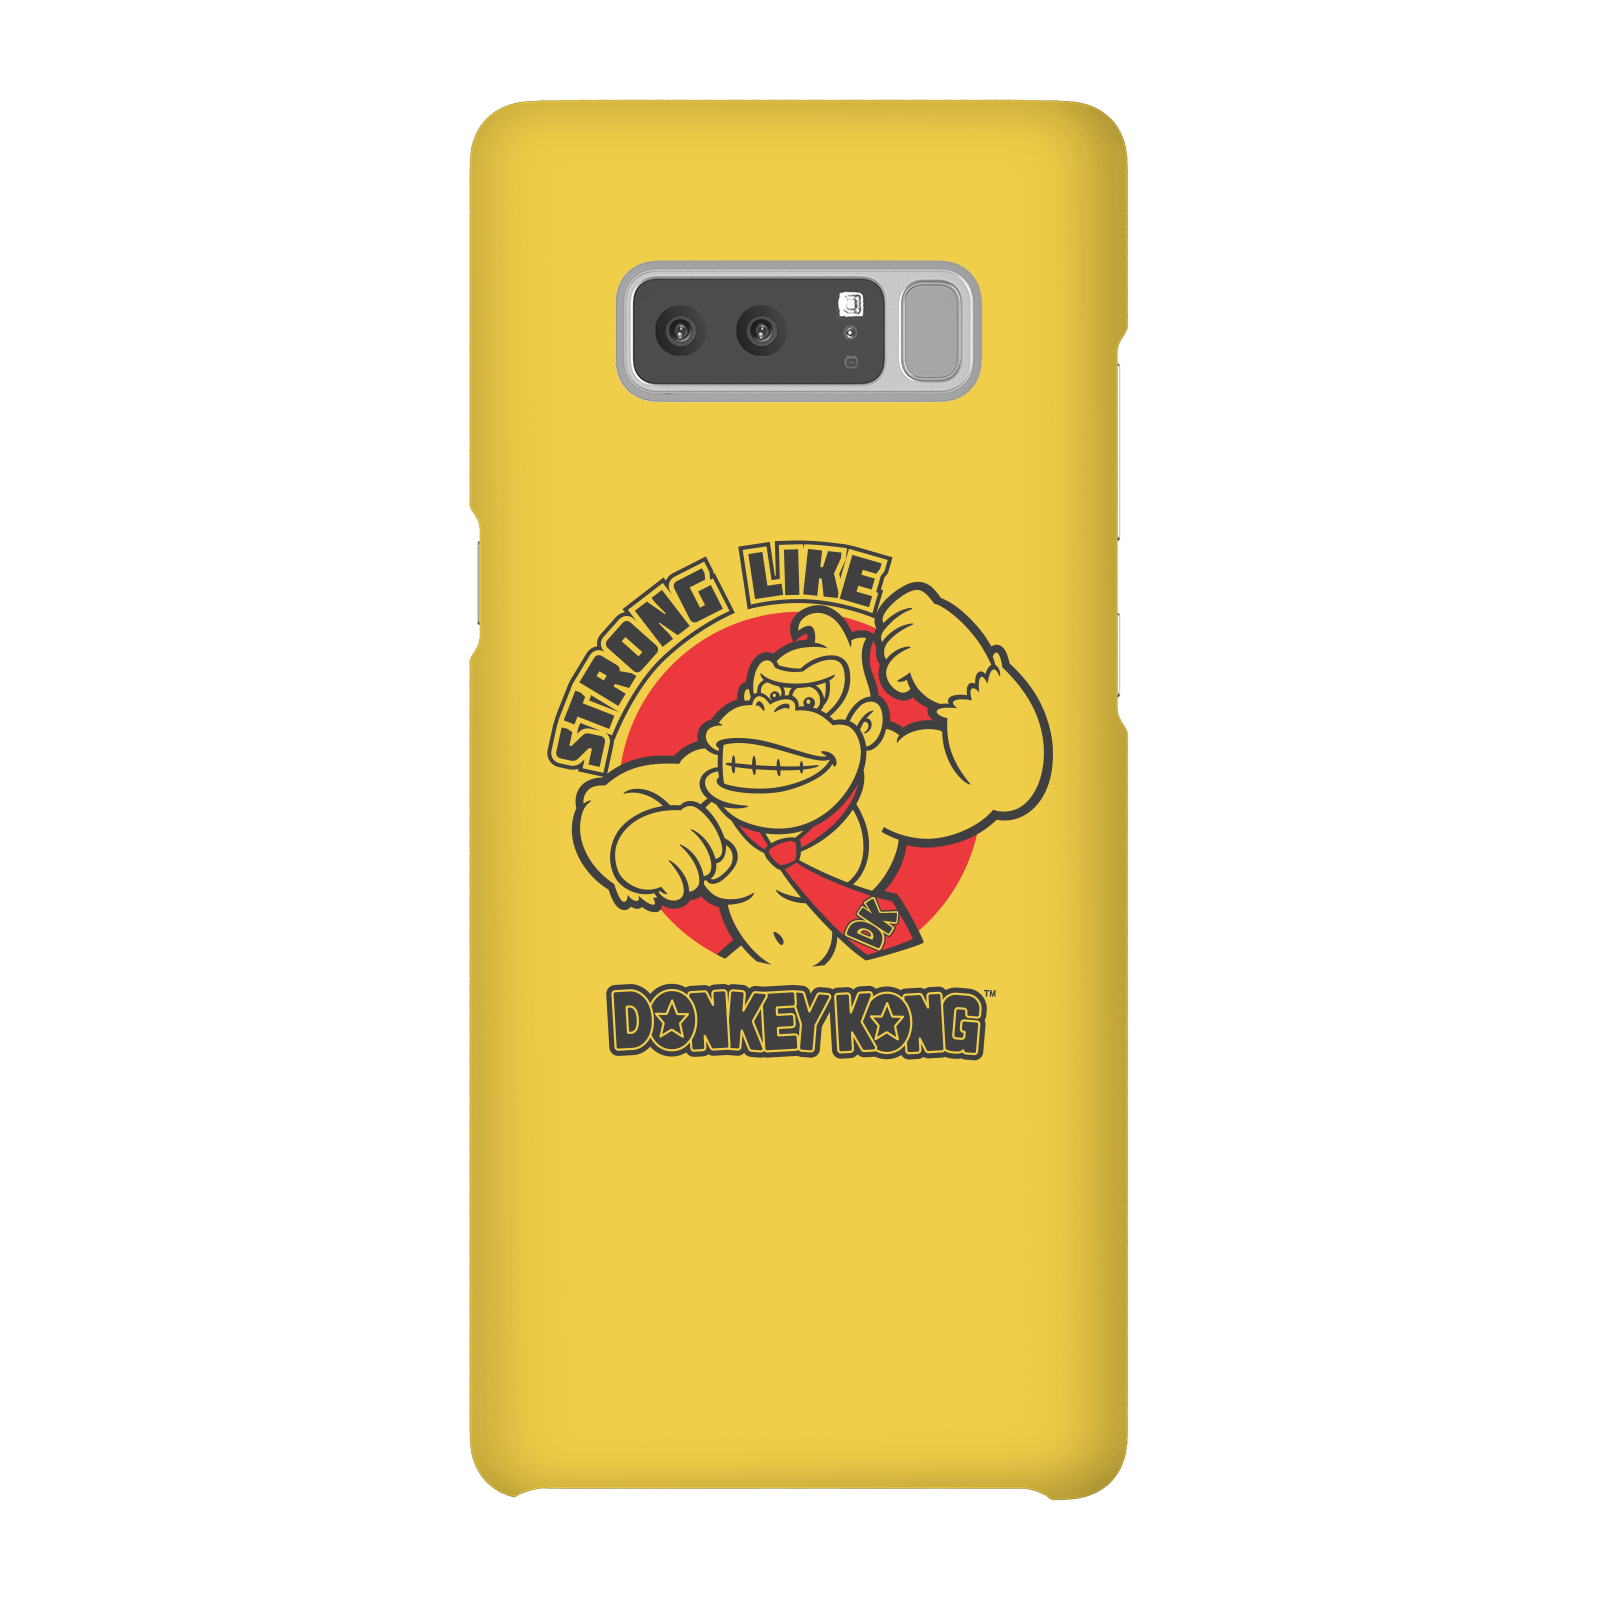 Nintendo Donkey Kong Strong Like Donkey Kong Phone Case - Samsung Note 8 - Snap Case - Gloss